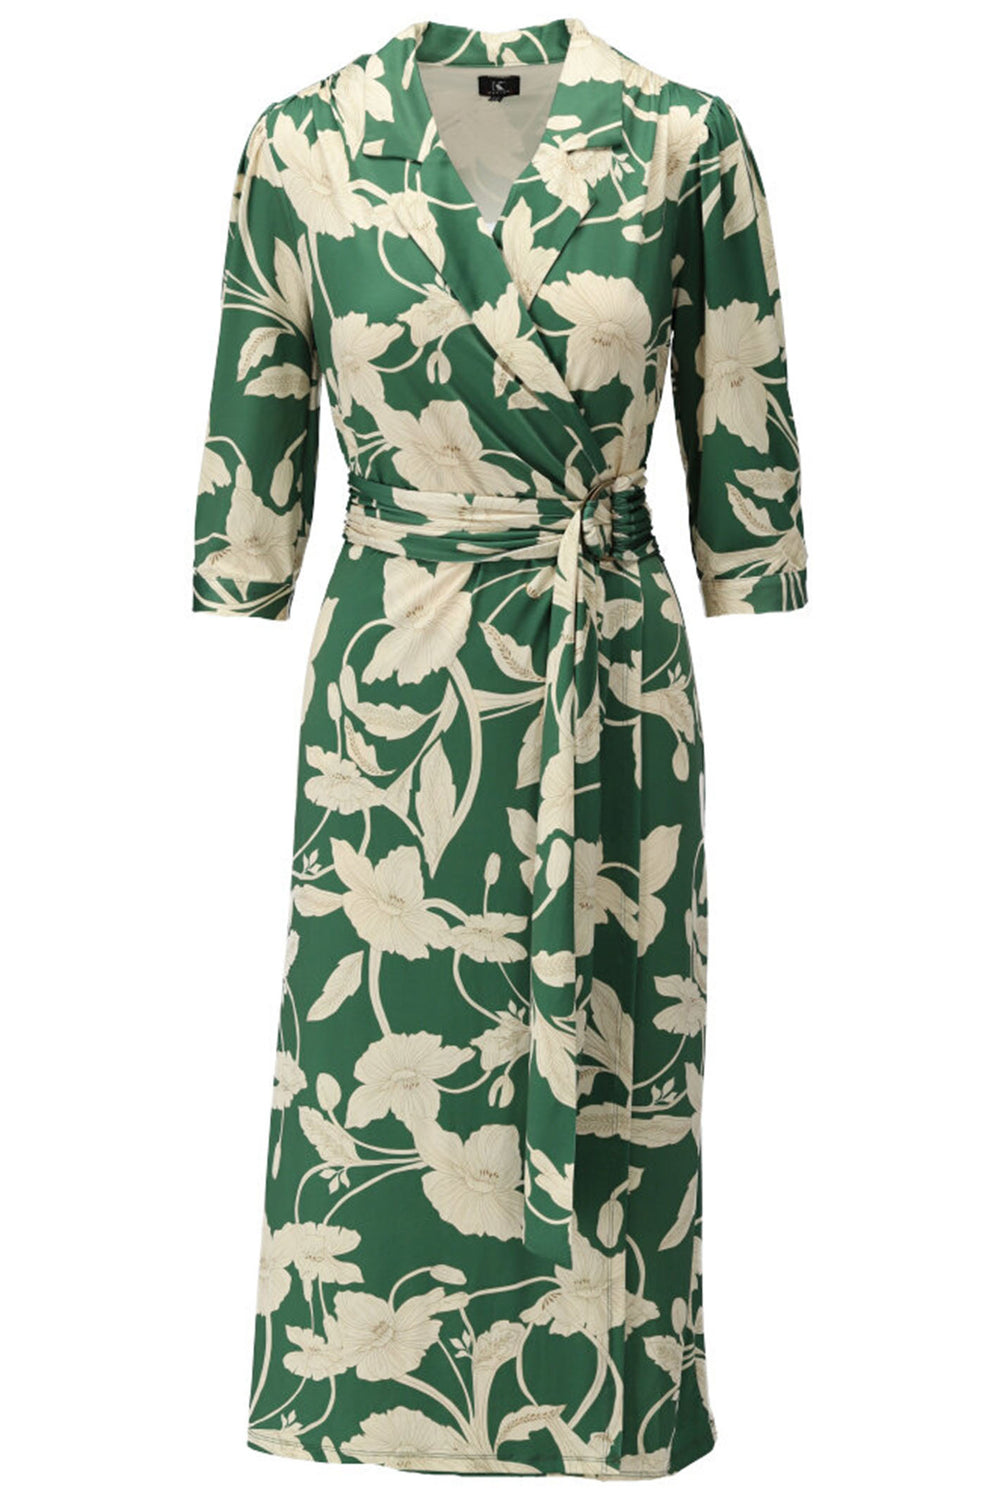 K-Design Y131 Green Flower Print Wrap Dress - Dotique